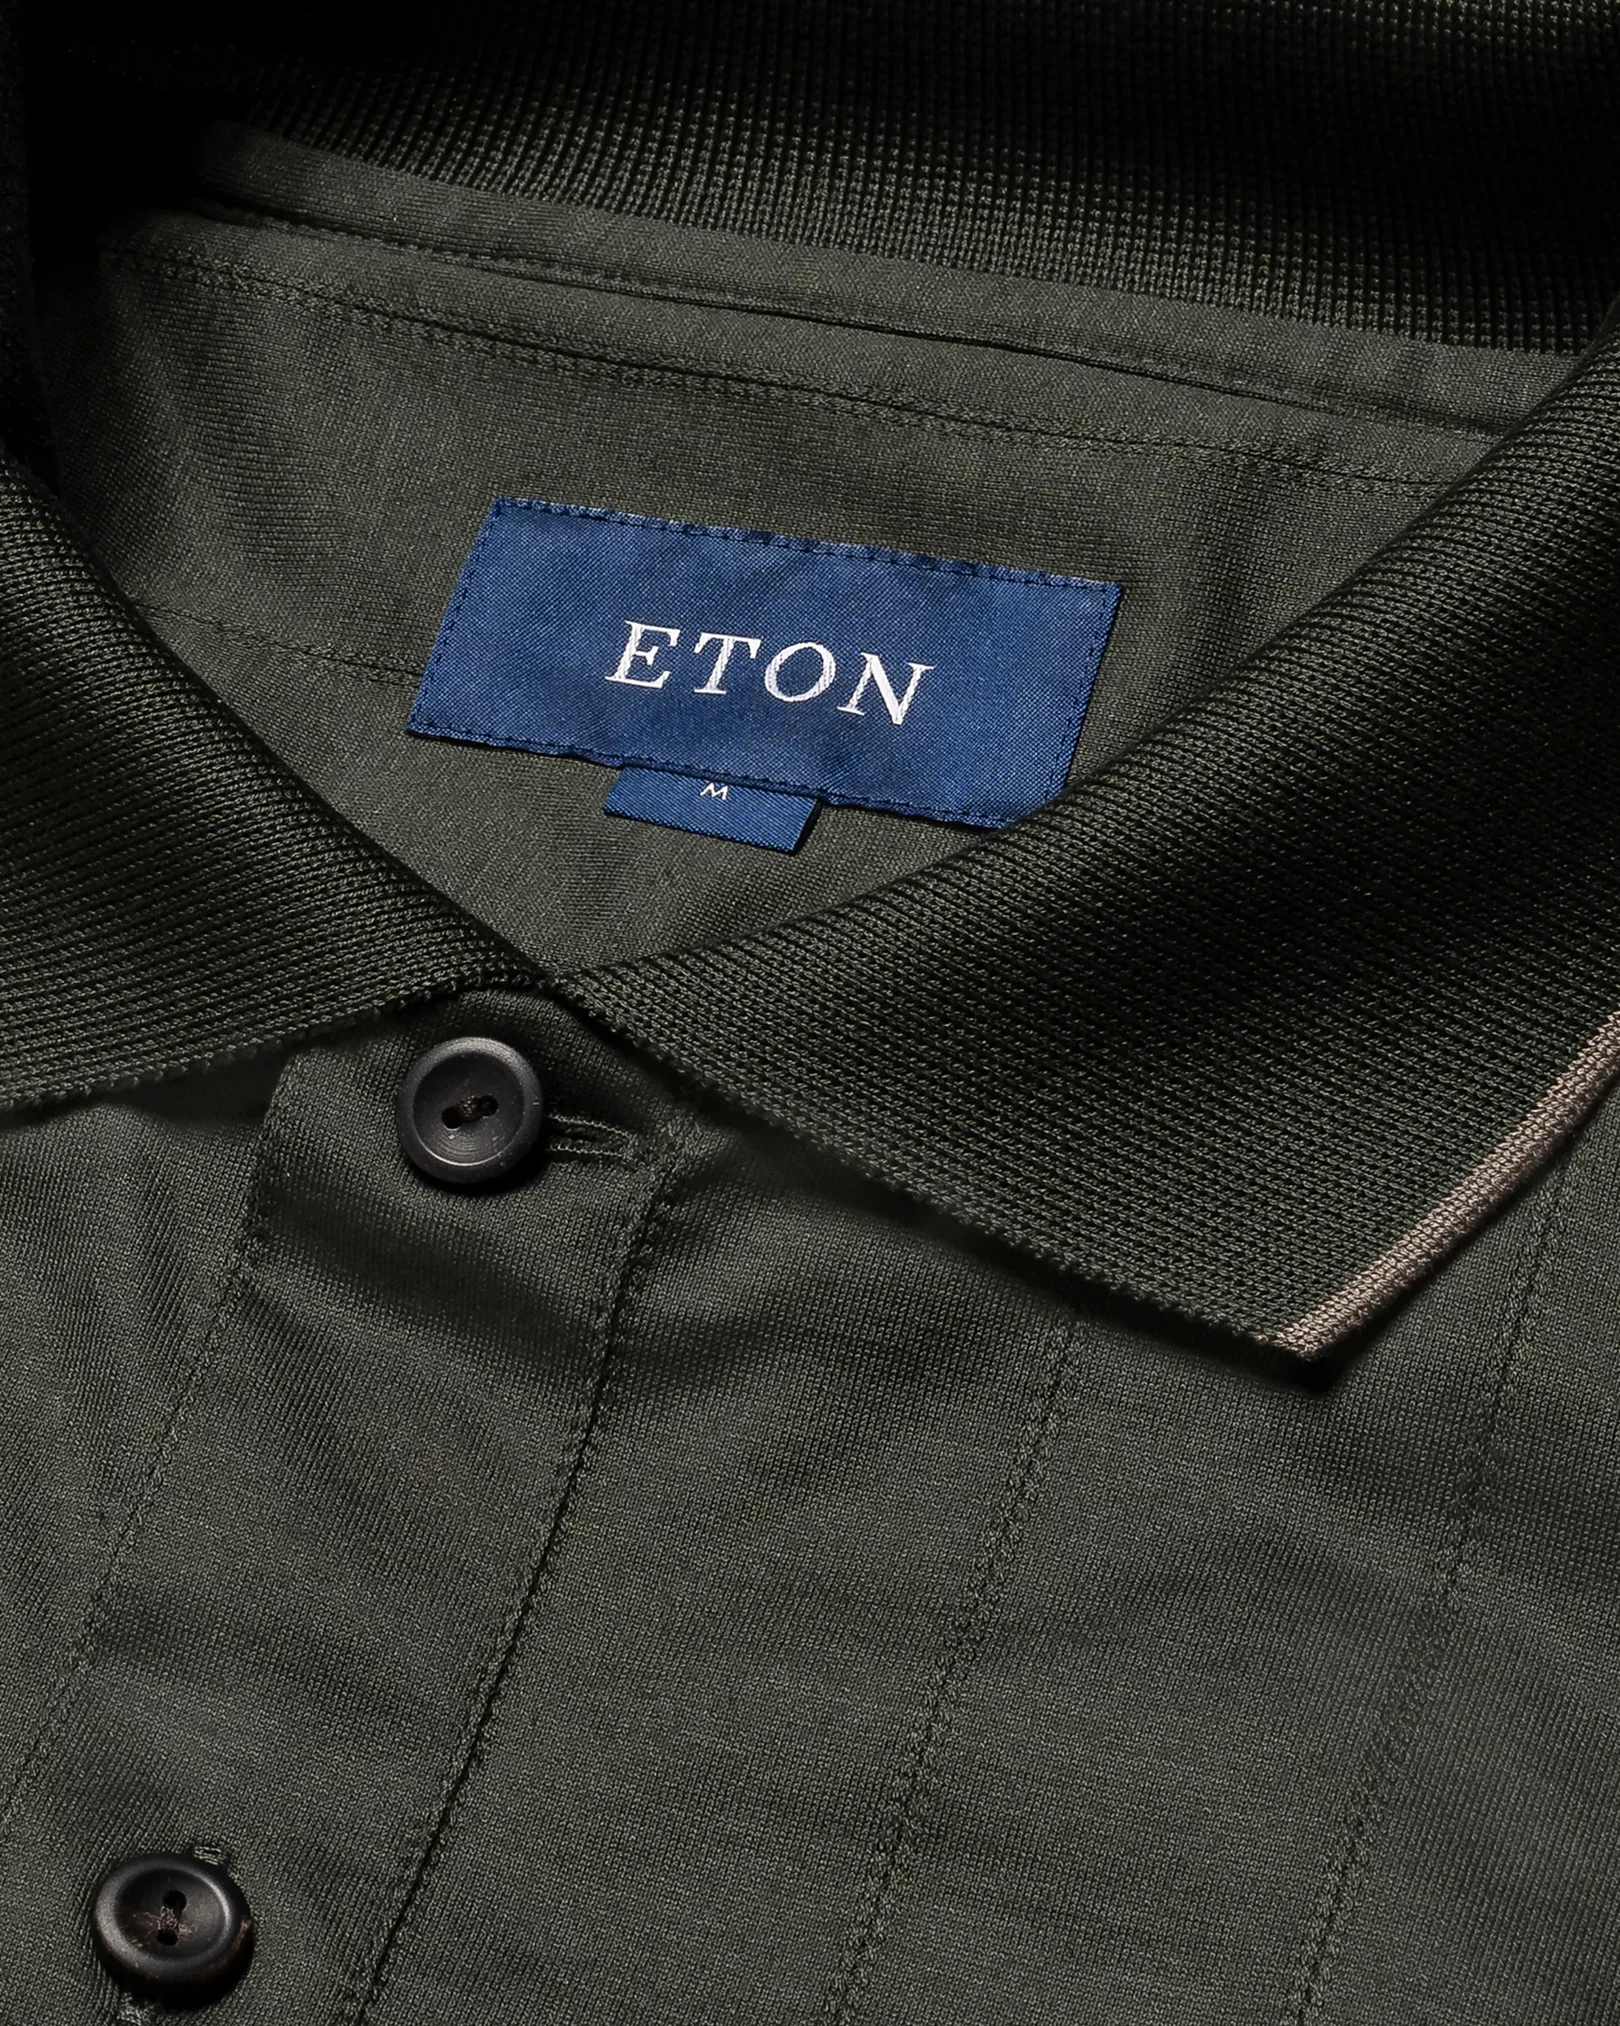 Eton - dark green knitted jersey long sleeve